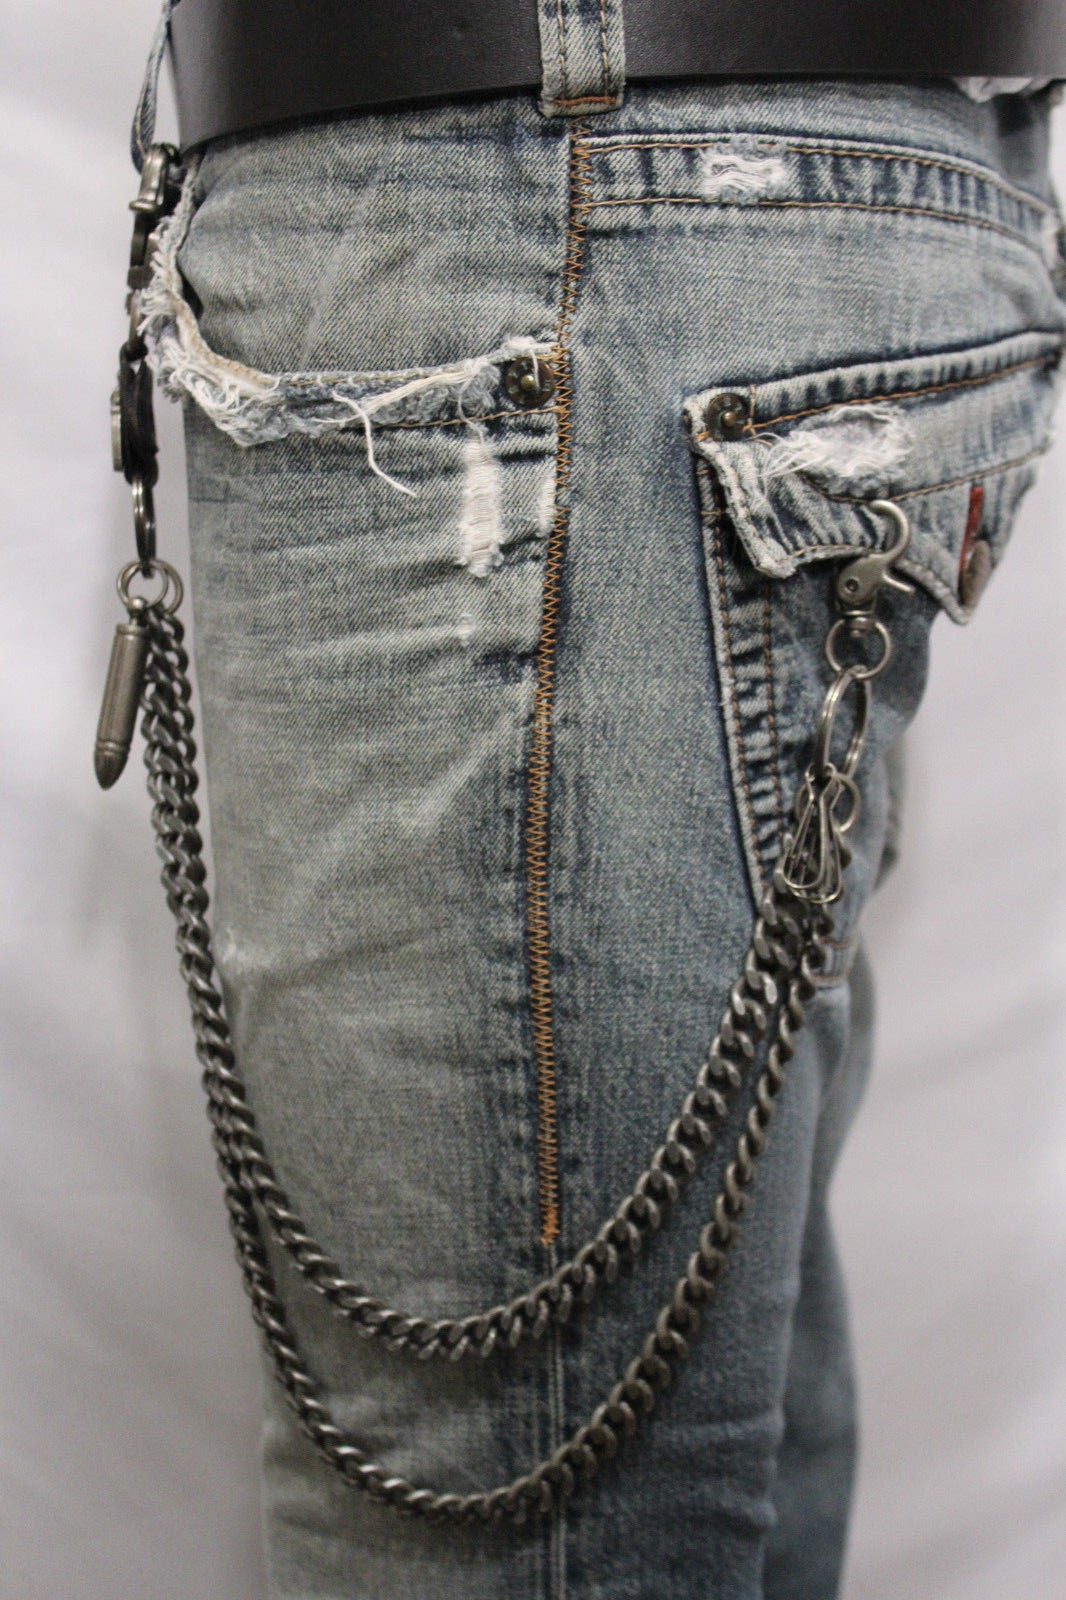 wallet chain jeans